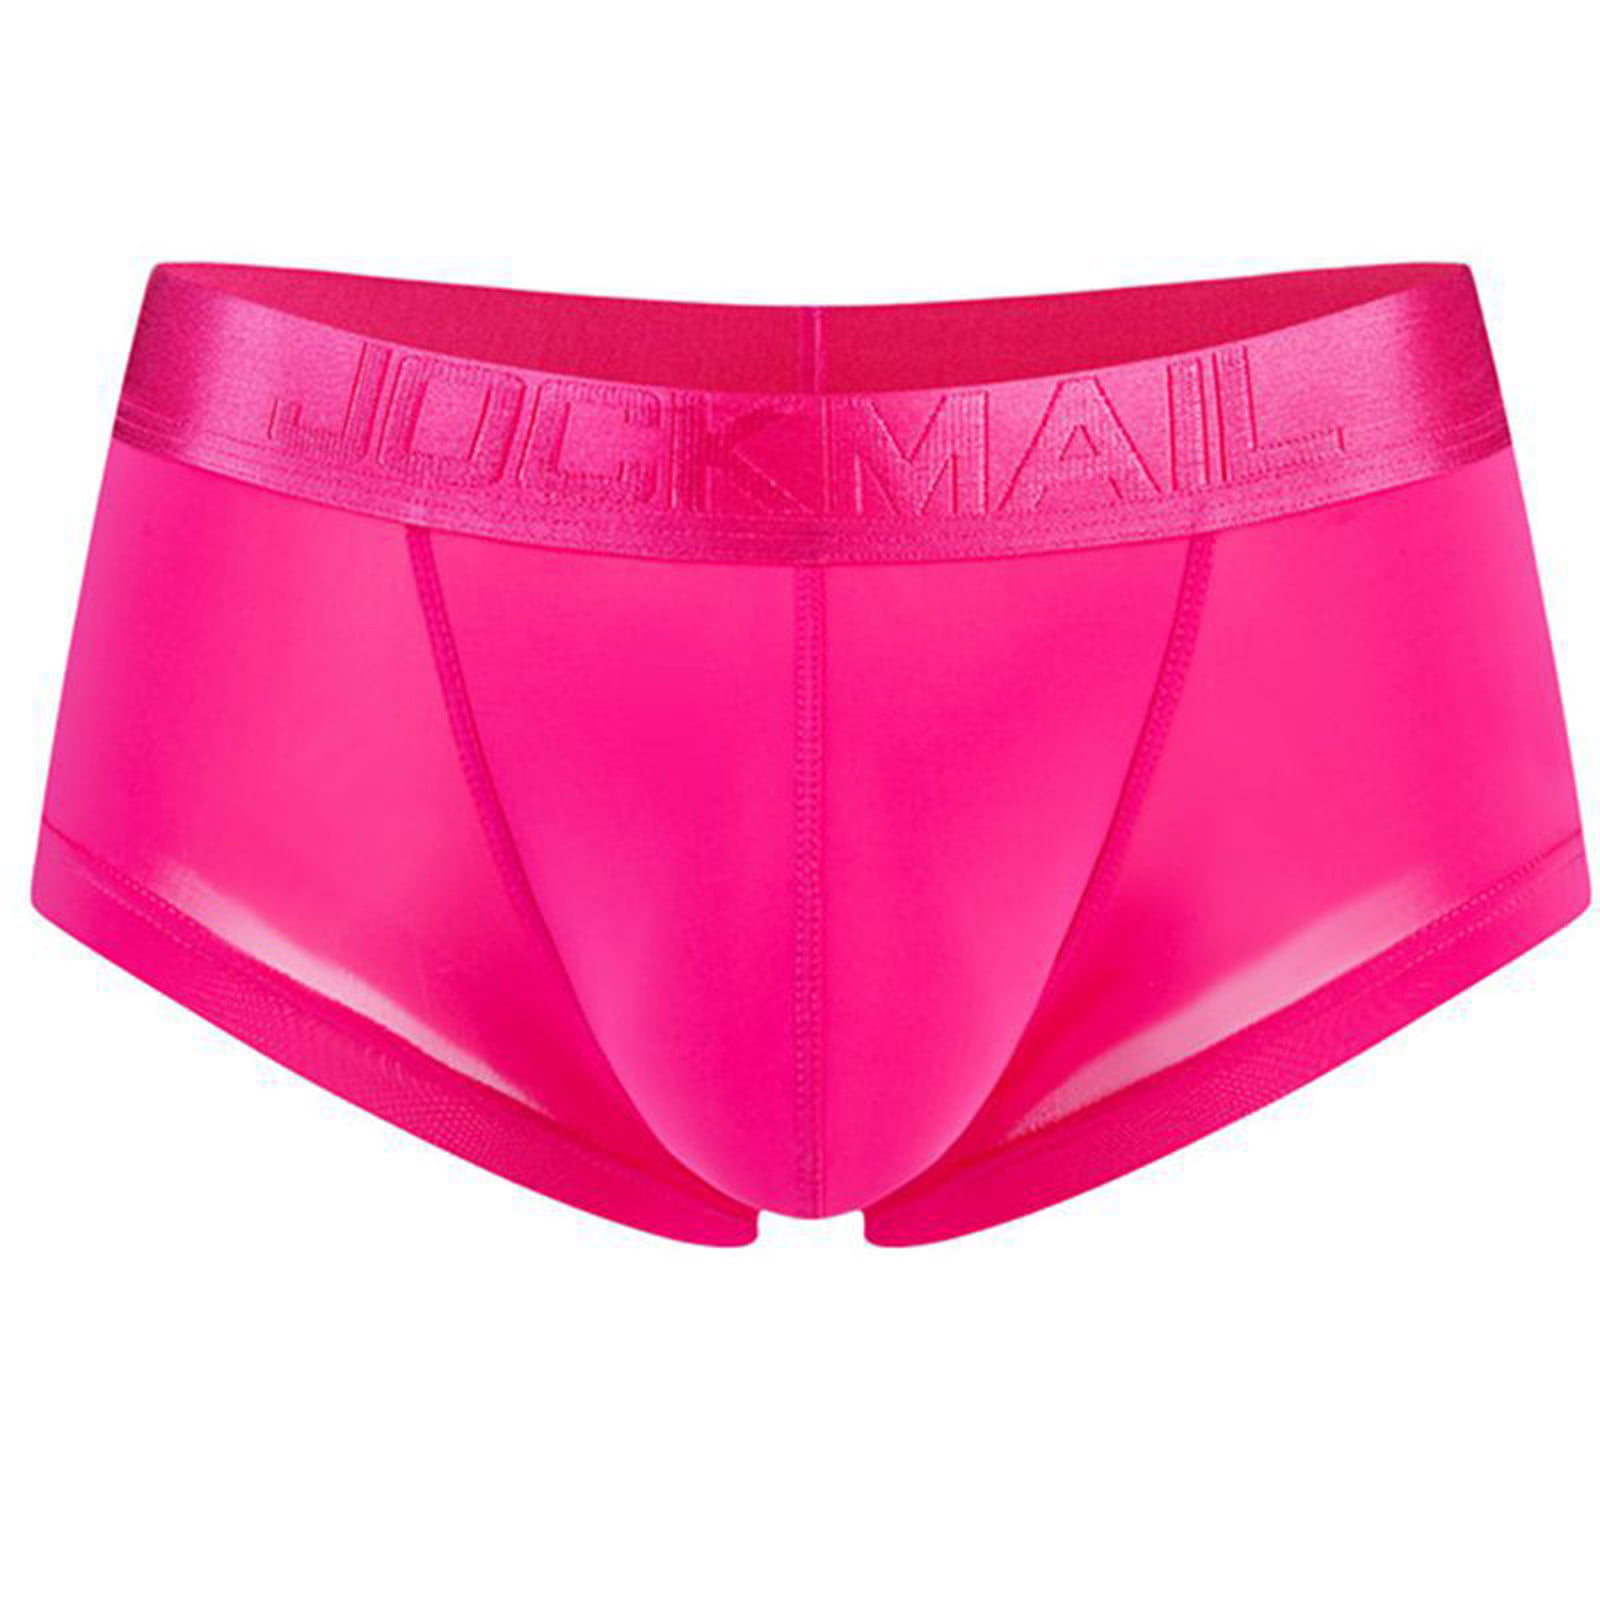 OVTICZA Bulk Mens Boxers Underwear Ice Silk Comfortable Sexy Underwear for  Men Pack Cotton Hot Pink XL 